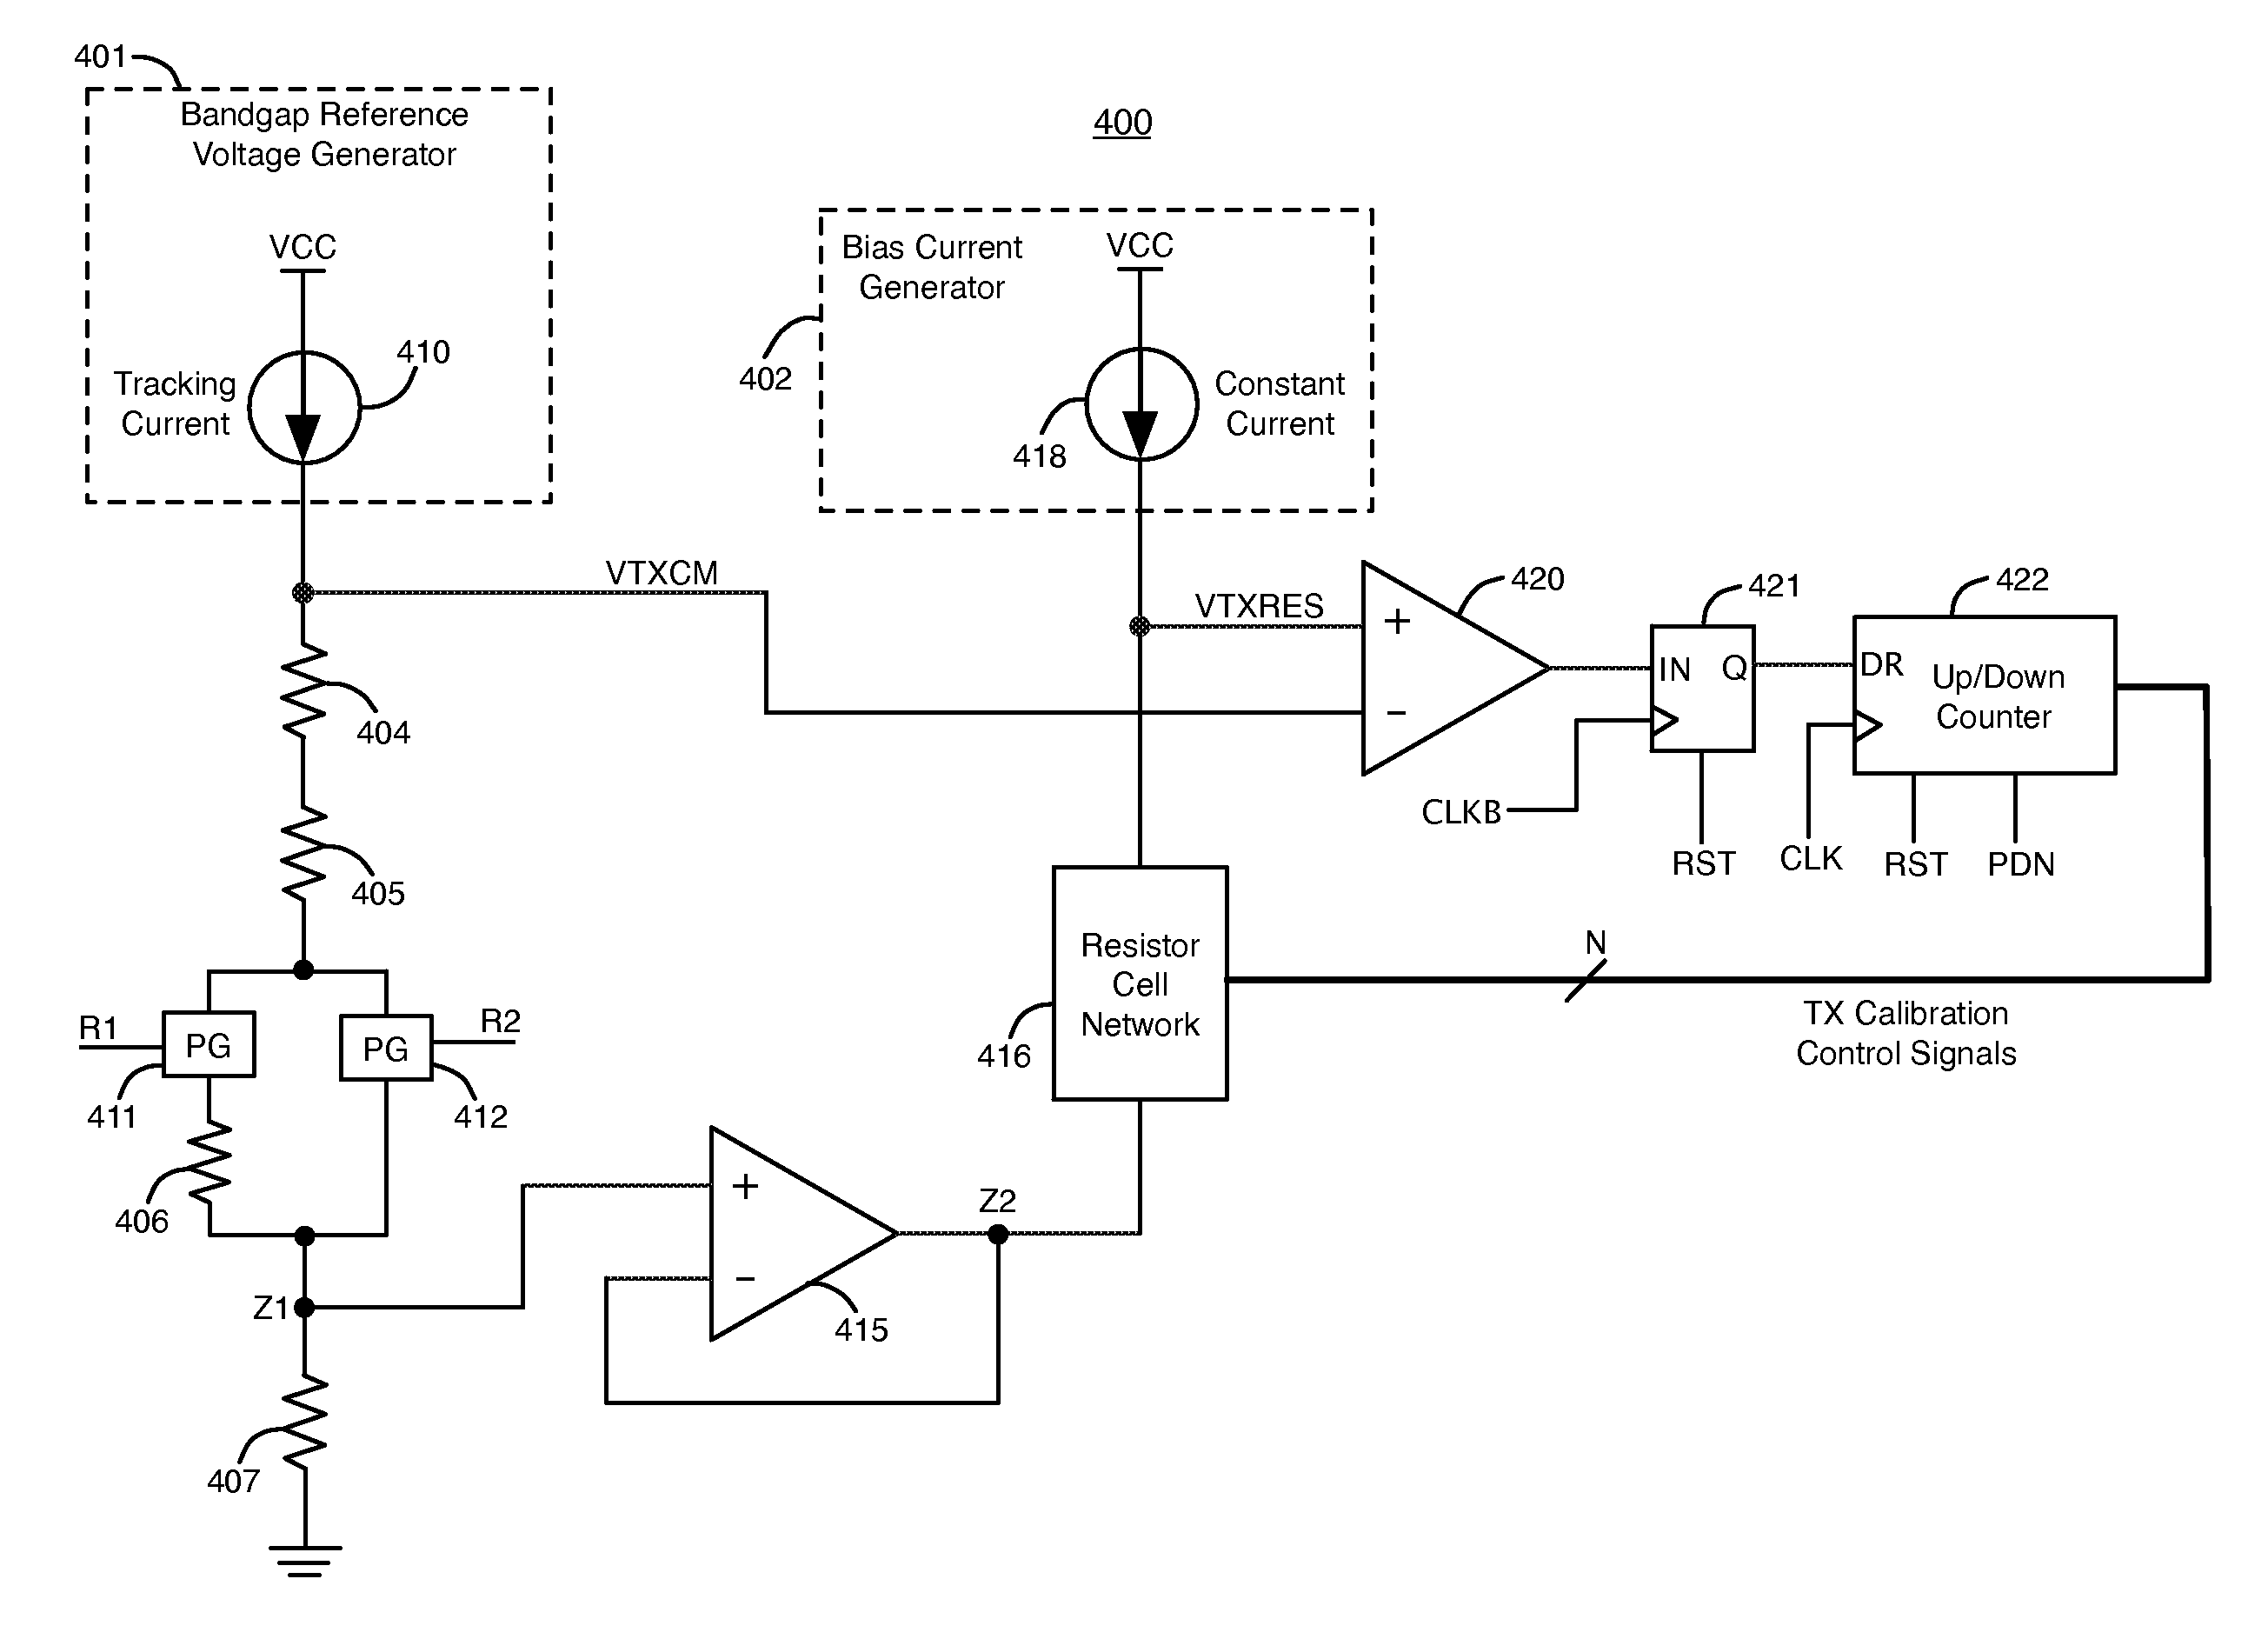 Techniques for calibrating on-chip termination impedances